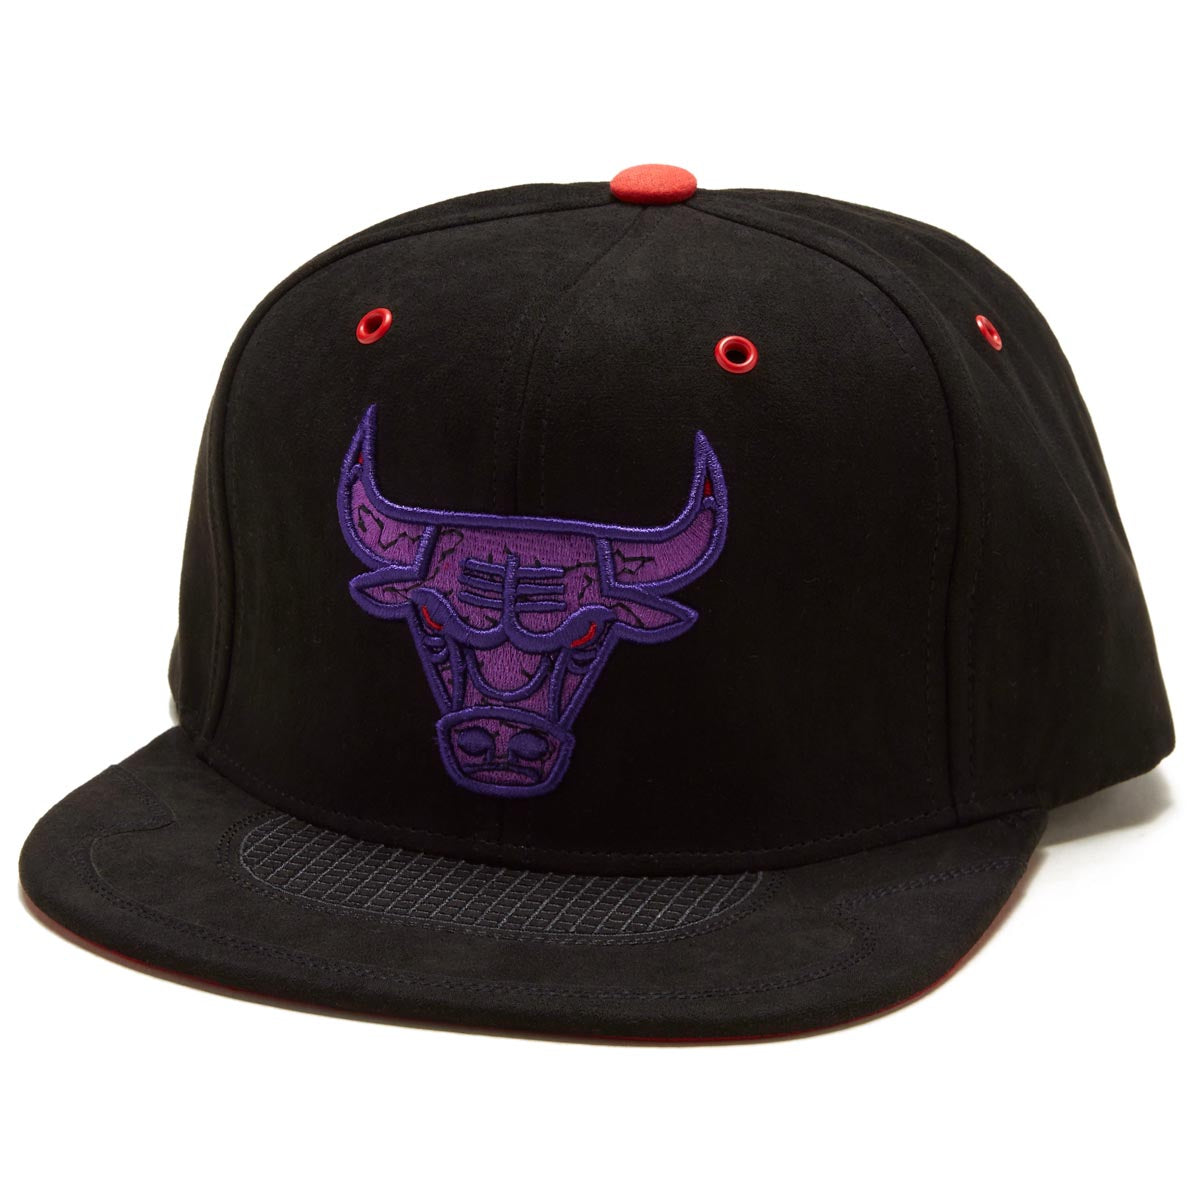 Mitchell & Ness x NBA Day 4 Snapback Bulls Hat - Black/Purple image 1